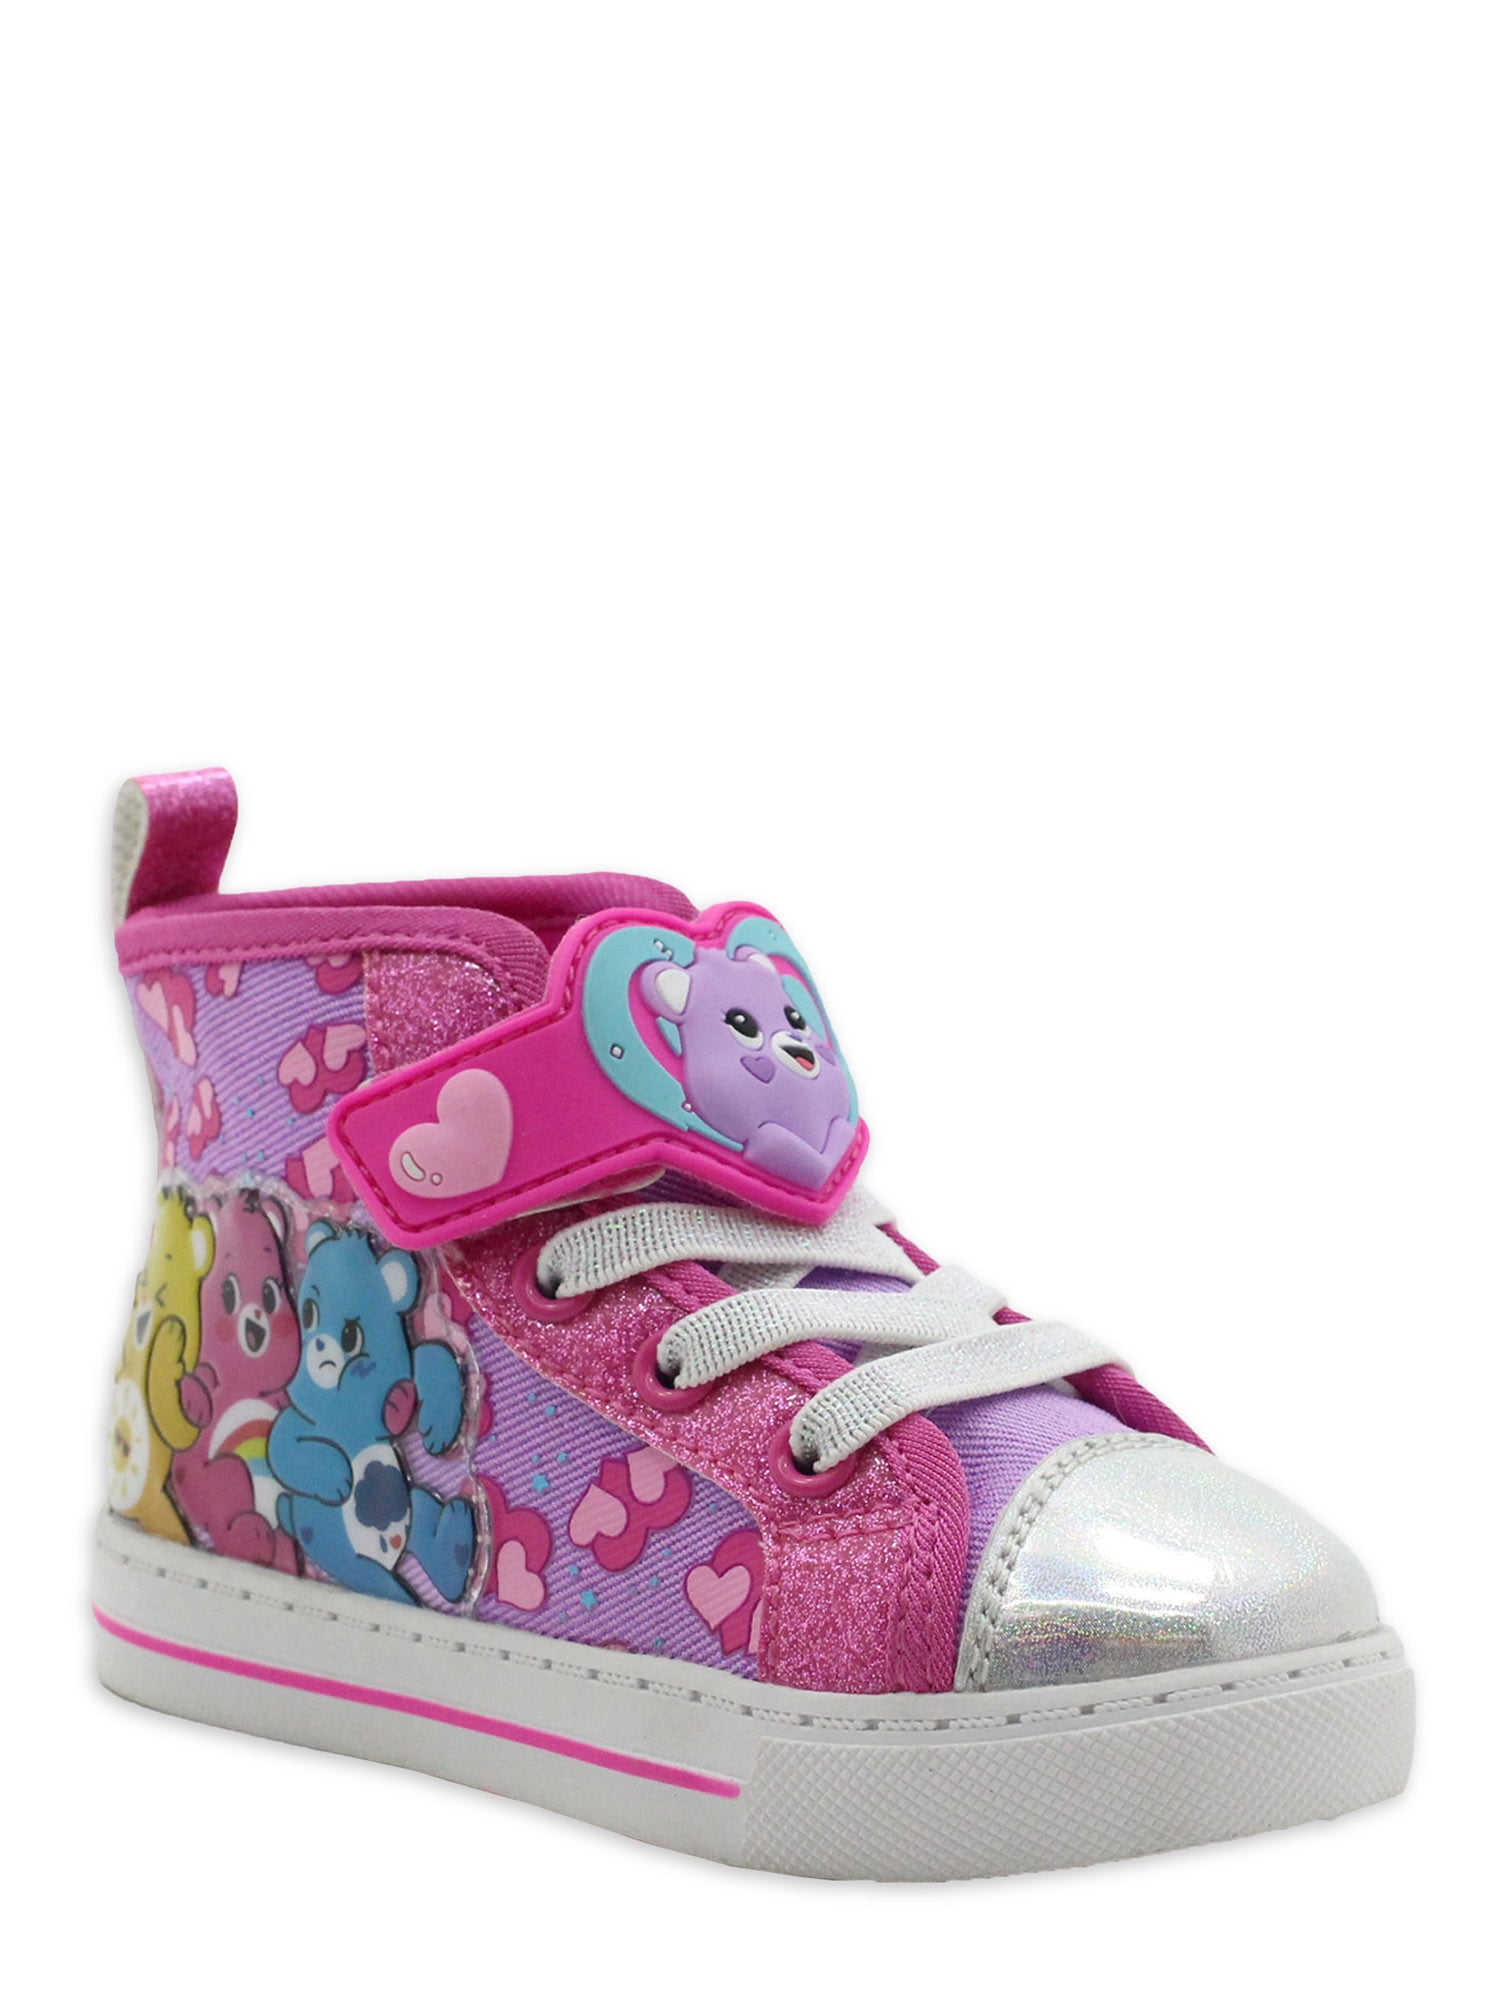 Care Bears Fashion High Top Sneaker (Toddler Girls) - Walmart.com